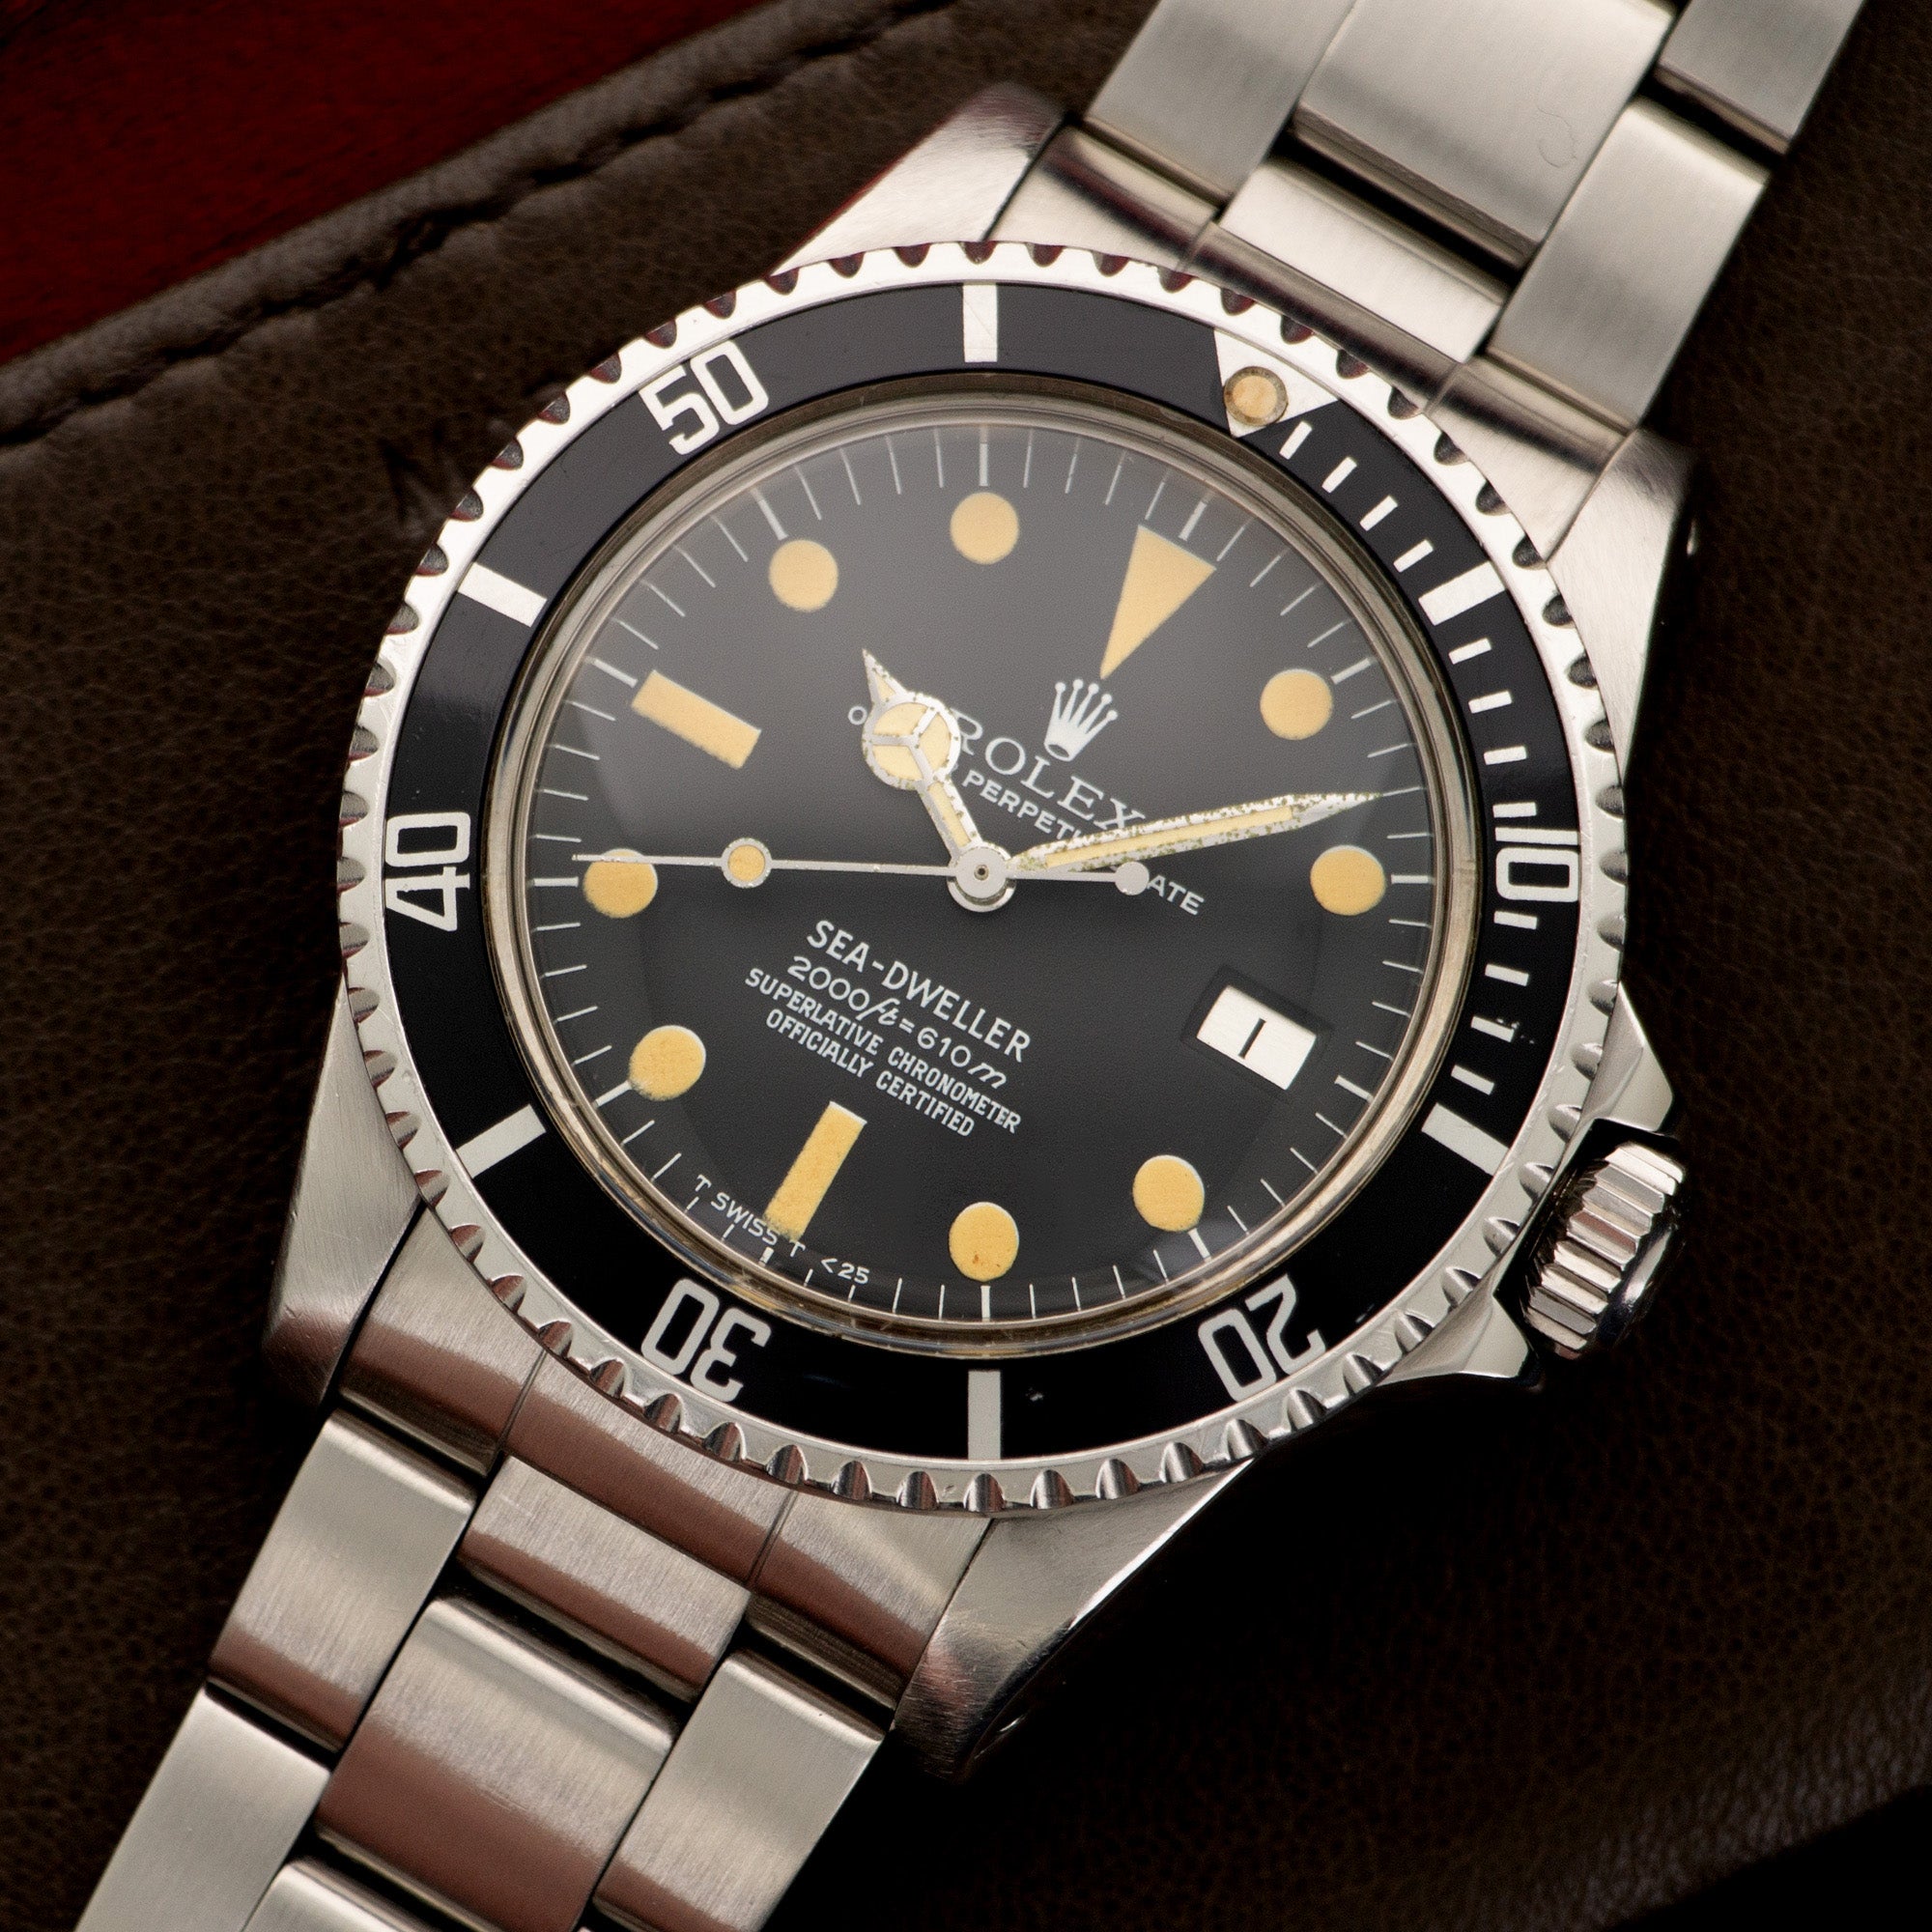 Rolex - Rolex Sea-Dweller Rail Dial Watch Ref. 1665, from 1979 - The Keystone Watches